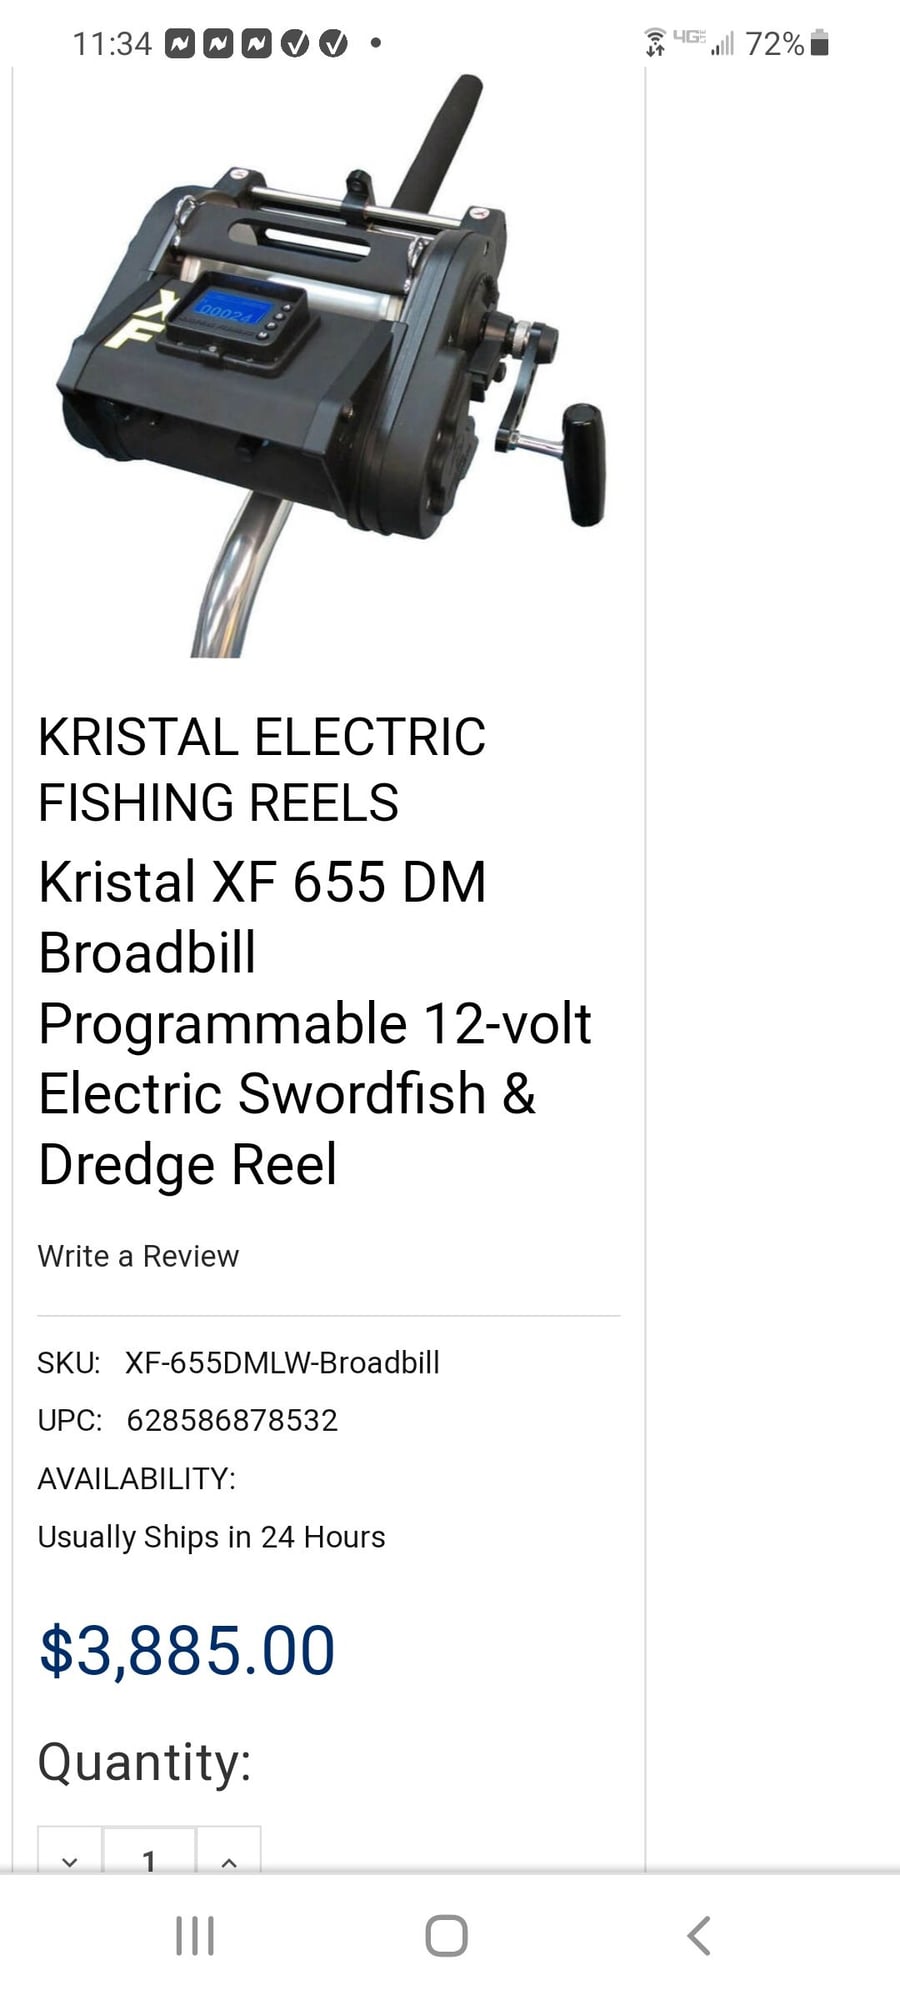 Kristal XF 655 DW. LW Broadbill & Swordfish electric reel. - The Hull Truth  - Boating and Fishing Forum